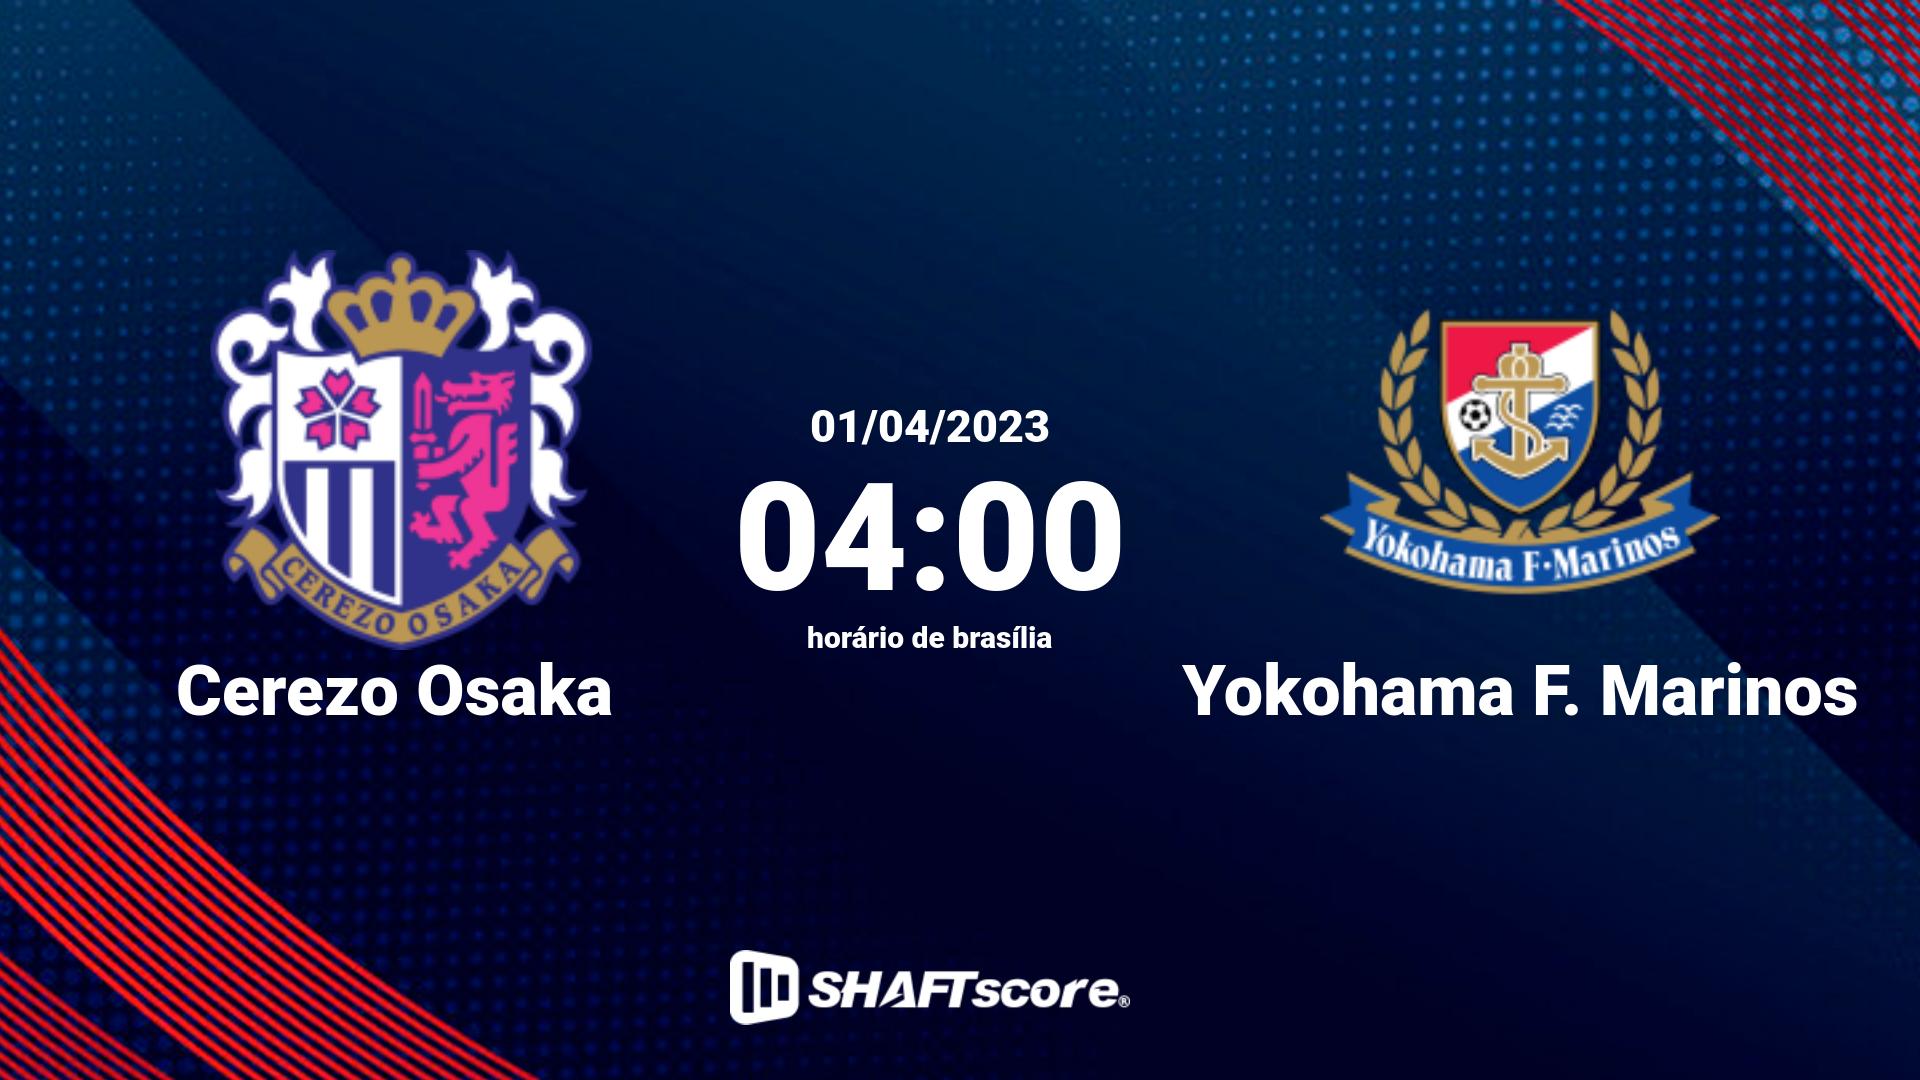 Estatísticas do jogo Cerezo Osaka vs Yokohama F. Marinos 01.04 04:00